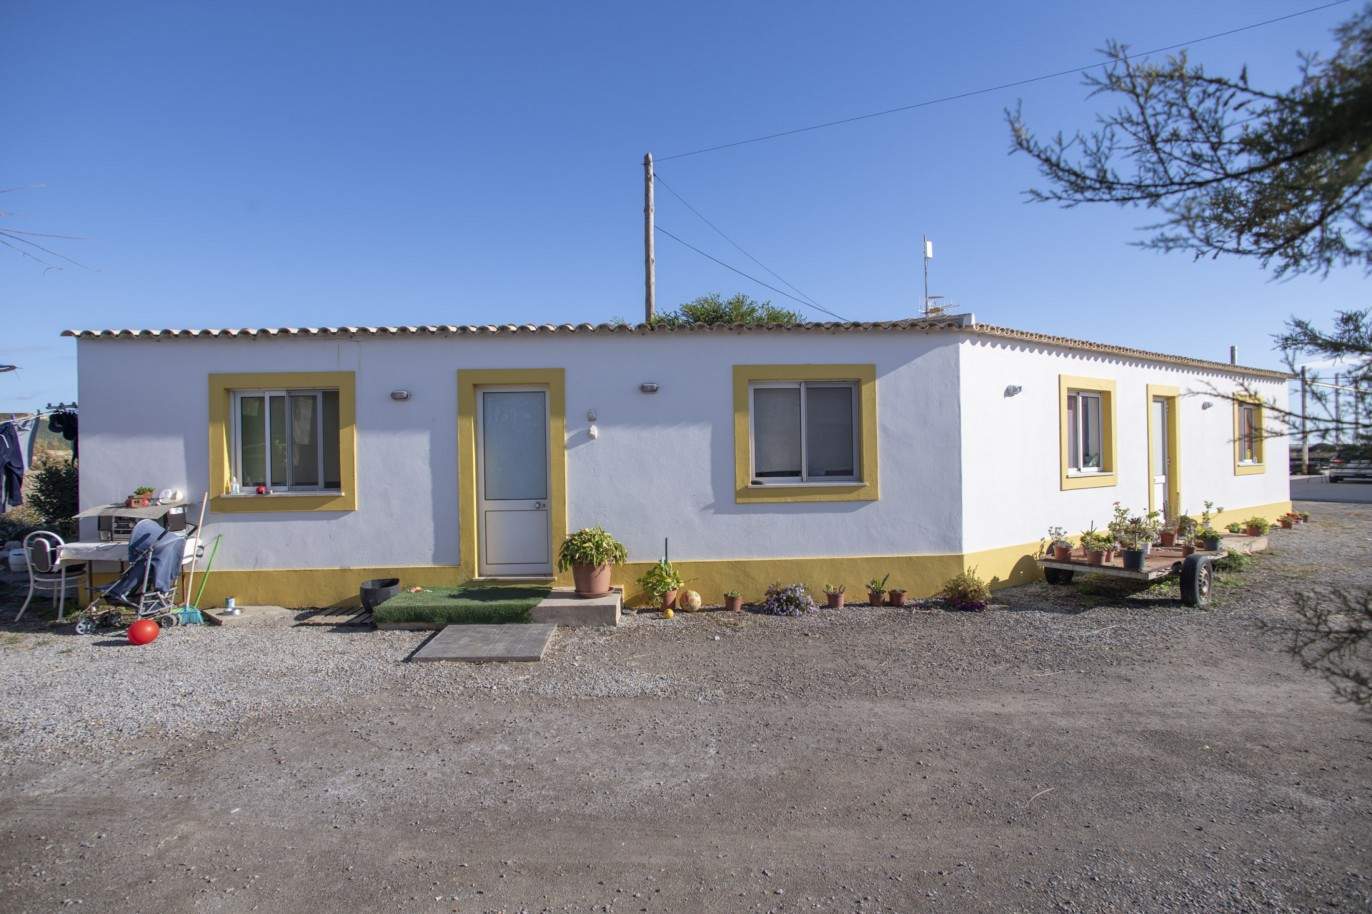 Property for sale in Ria Formosa, Algarve_209735